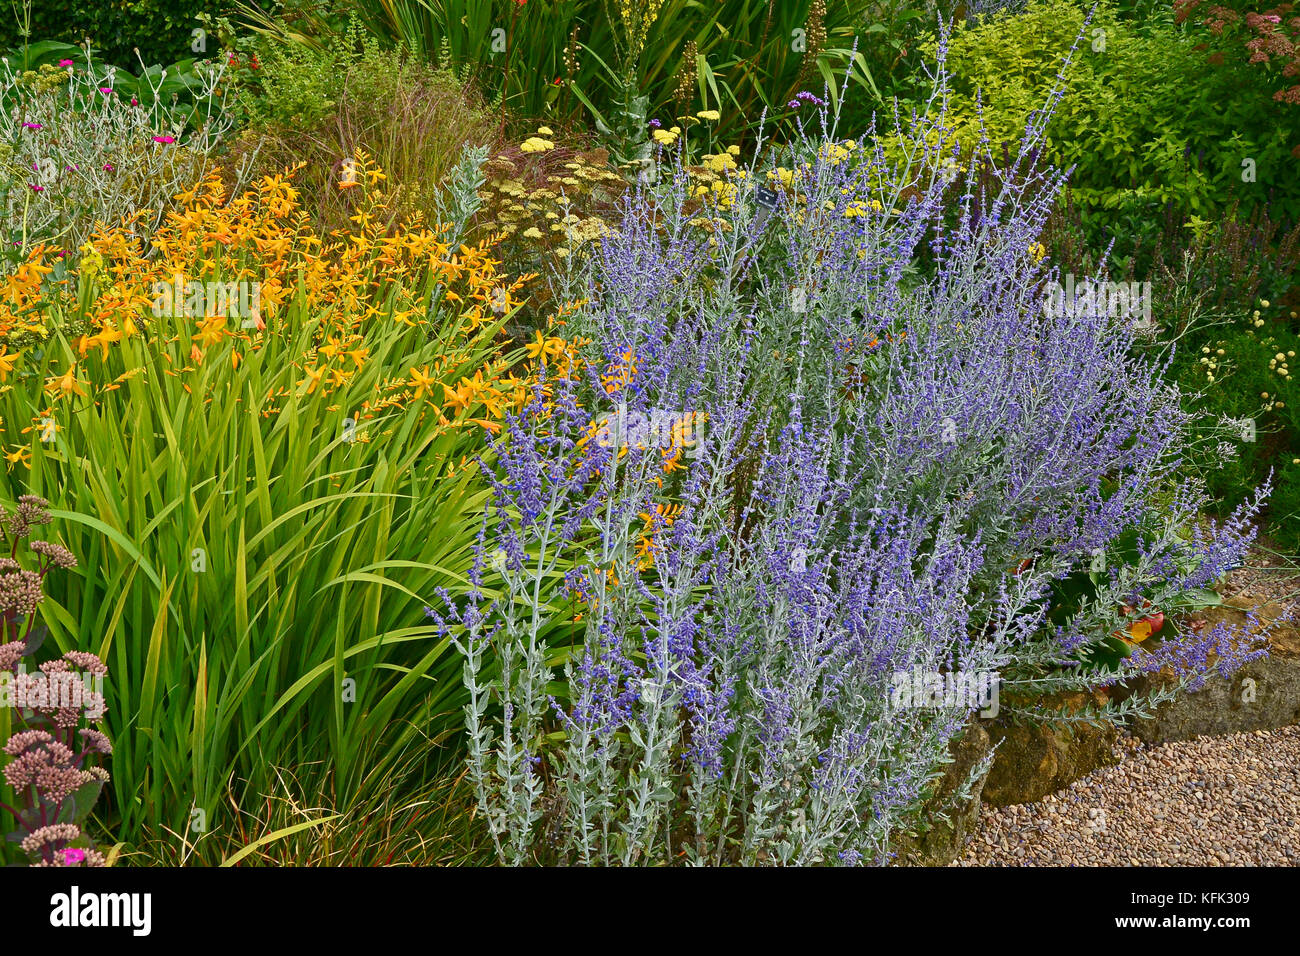 Garden flower border with Perovskia, Crocosmia and Verbascum making a colourful display Stock Photo